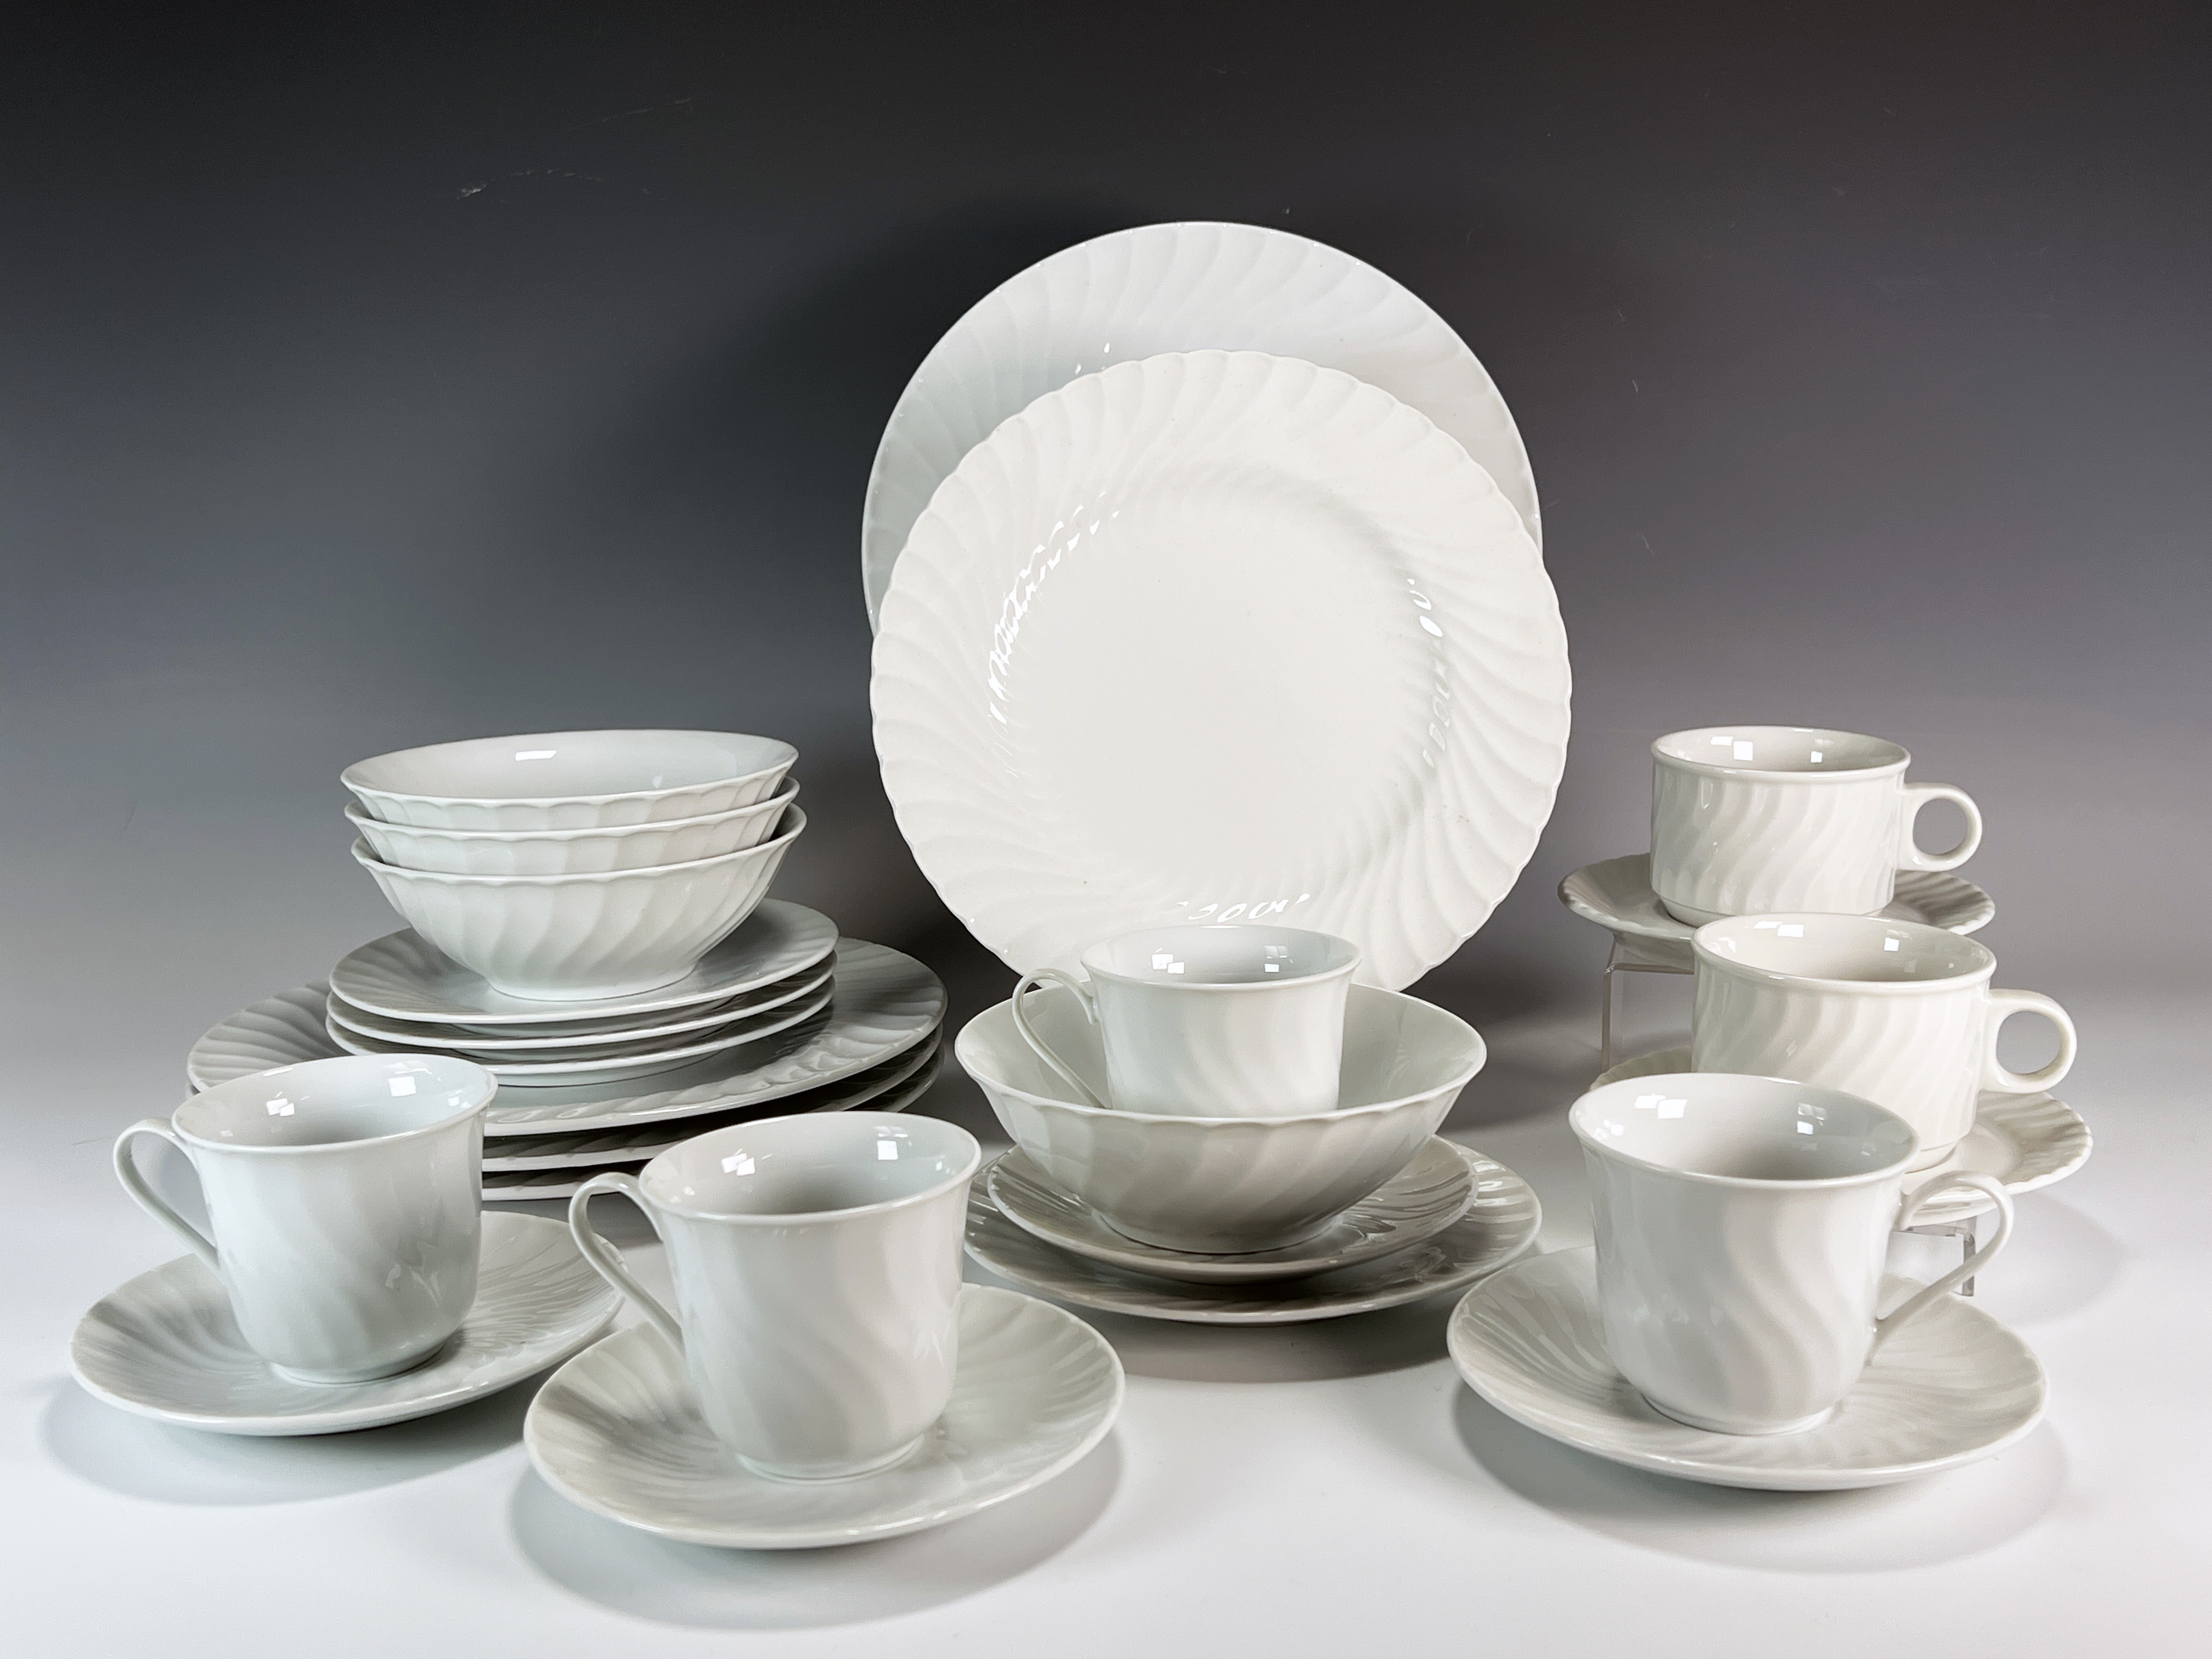 Schonwald & Burleighware Plates, Tea Cups, Saucers  image 1